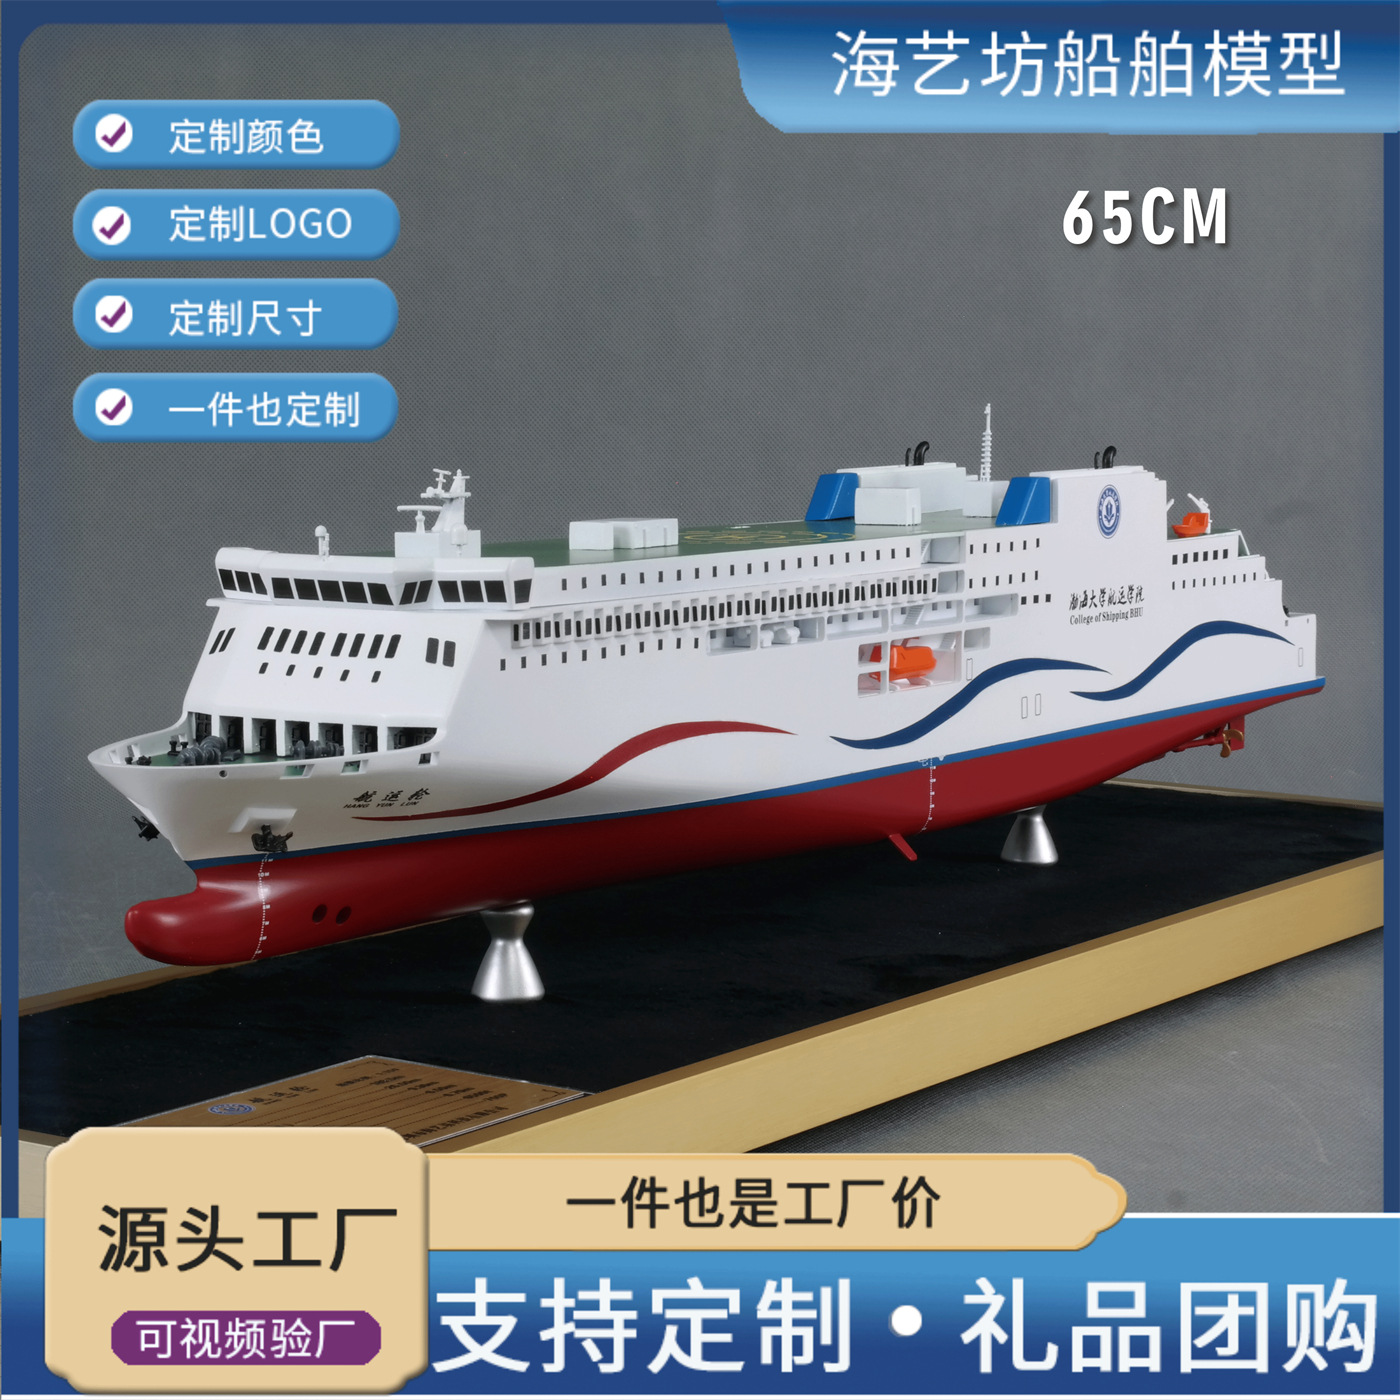 65cm渤海大學航運學院郵輪模型 制作仿真船模型 海藝坊工坊